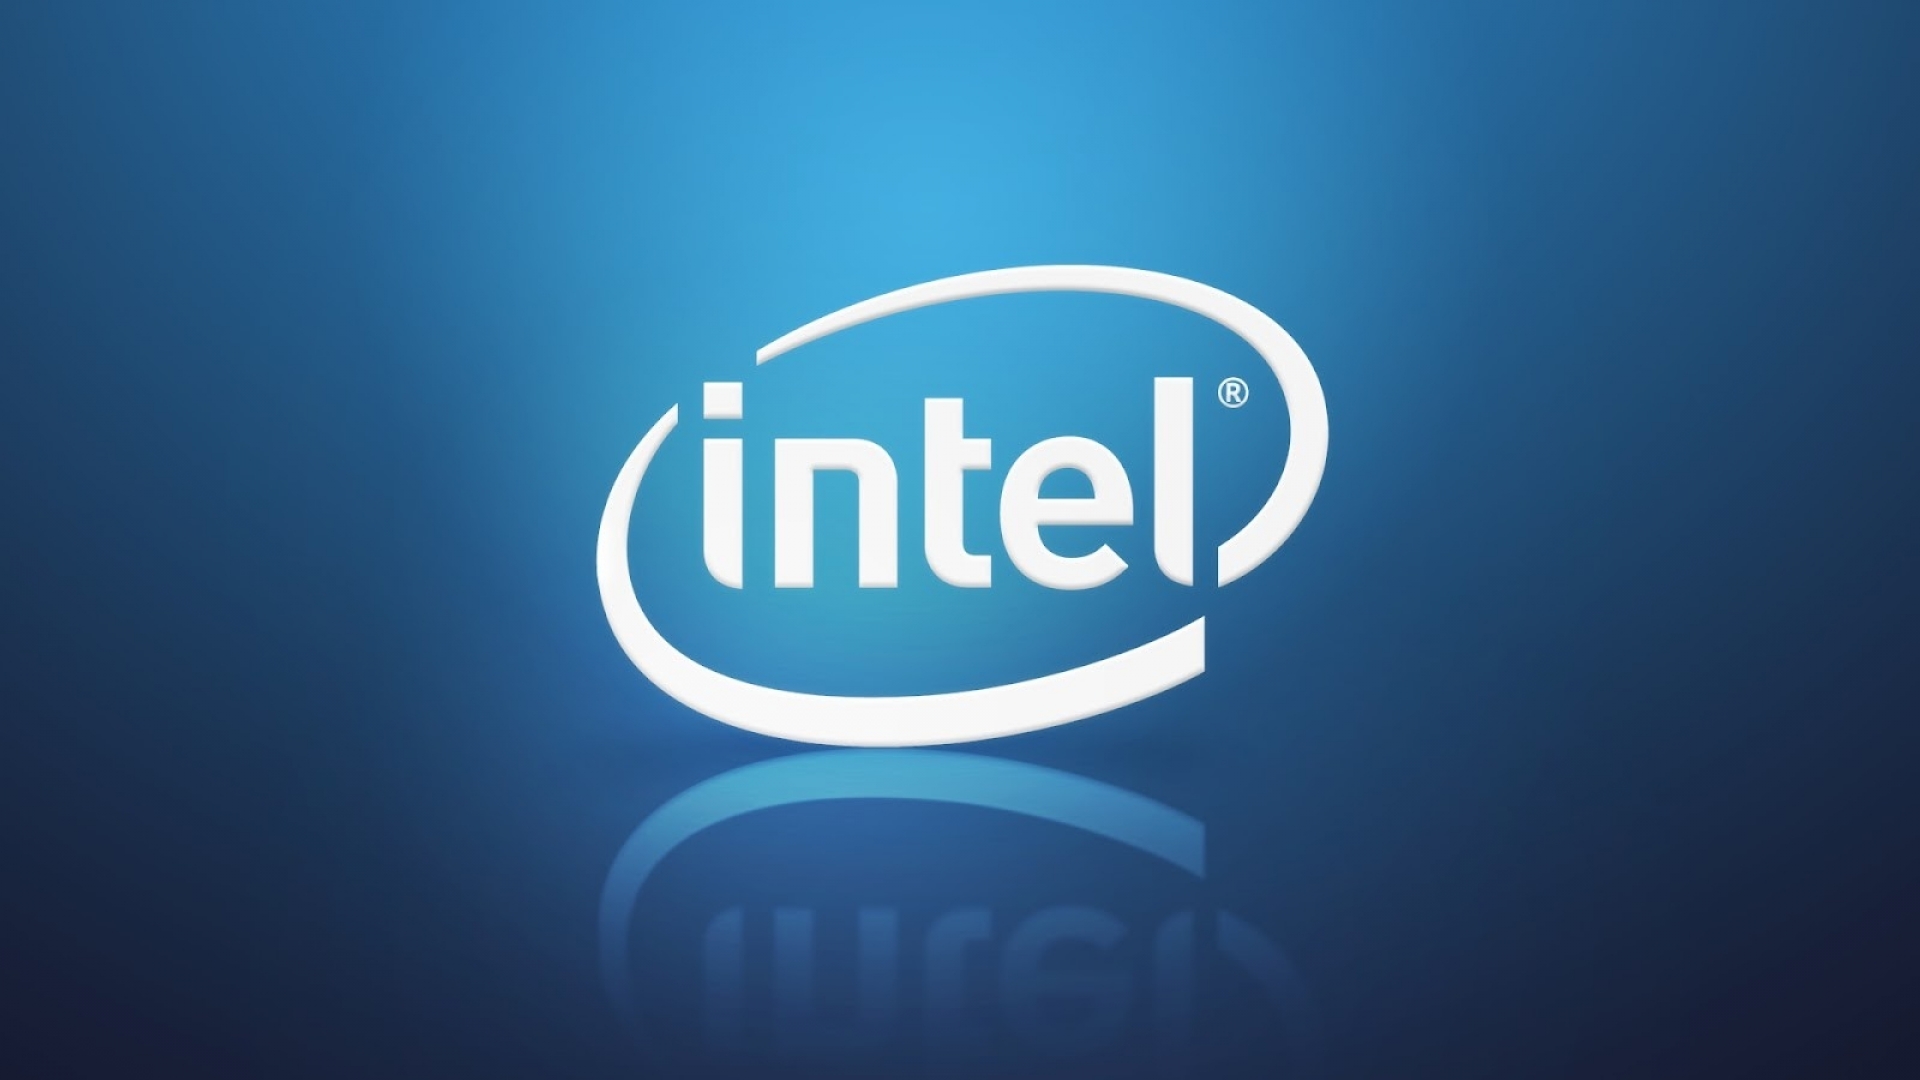 Intel brand